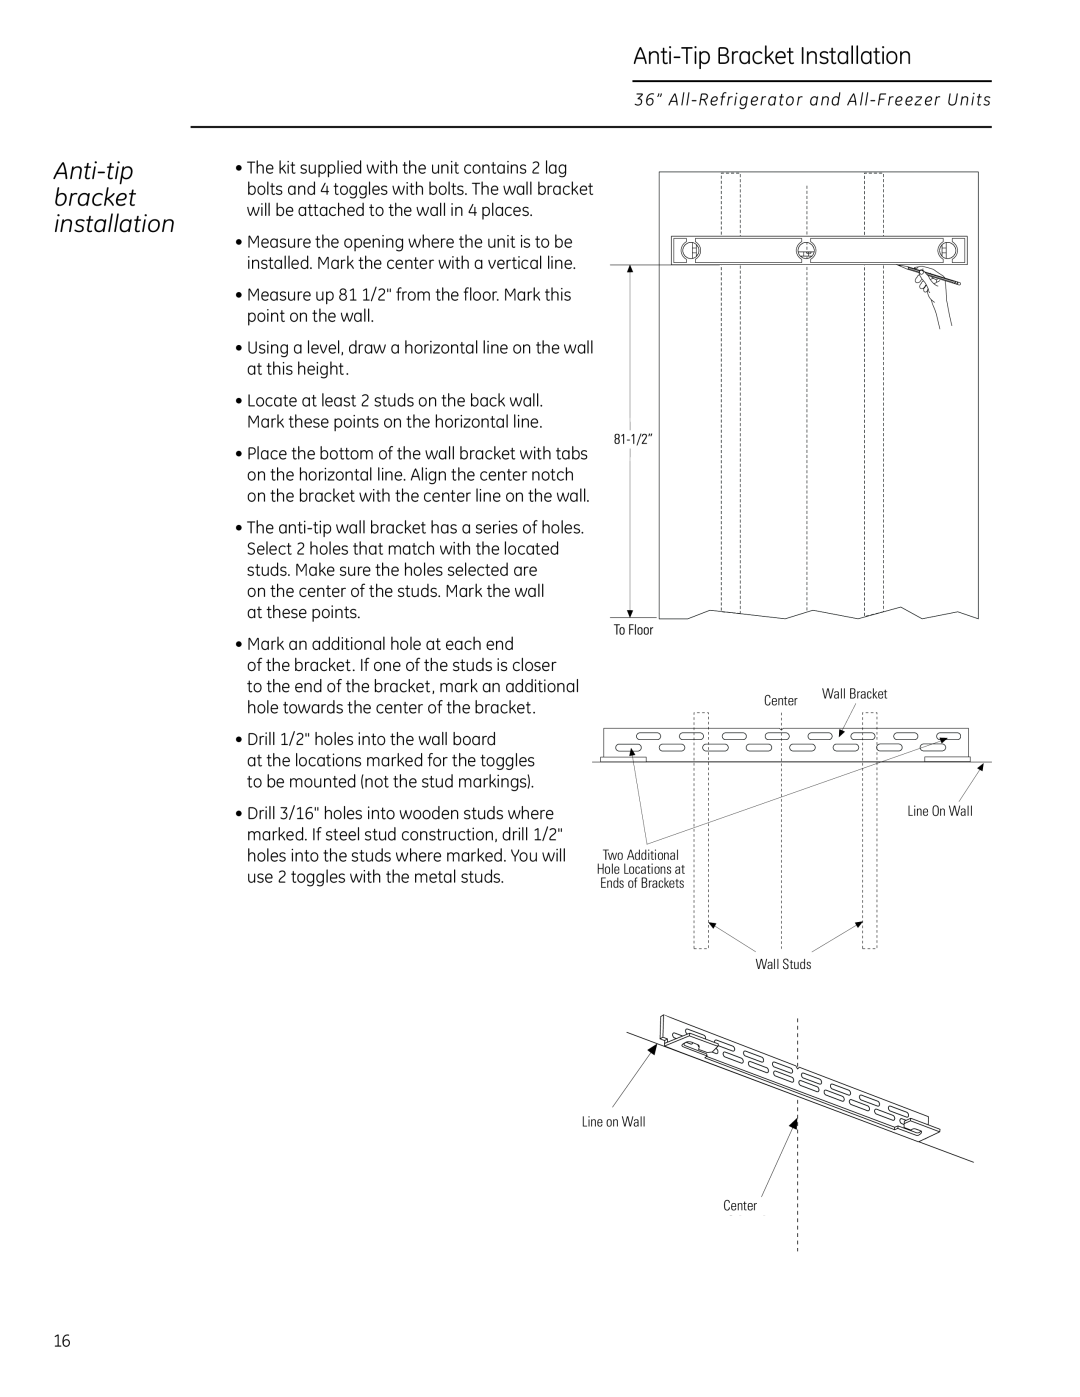 GE Monogram All-Refrigerators and All-Freezers owner manual Anti-tip bracket installation, Anti-Tip Bracket Installation 